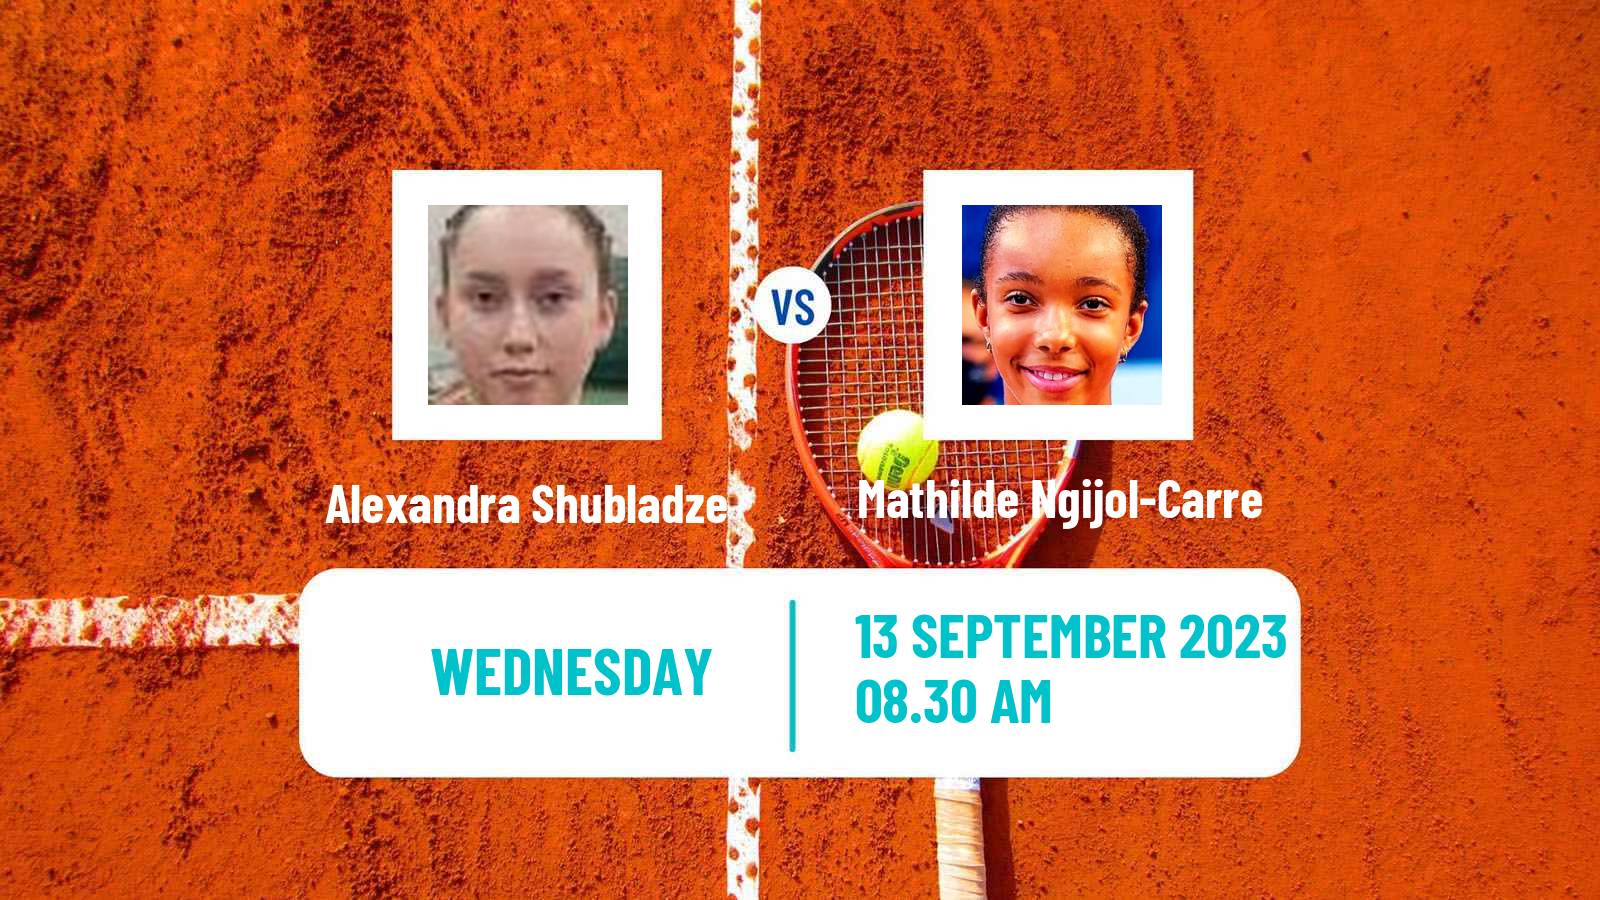 Tennis ITF W15 Dijon Women Alexandra Shubladze - Mathilde Ngijol-Carre